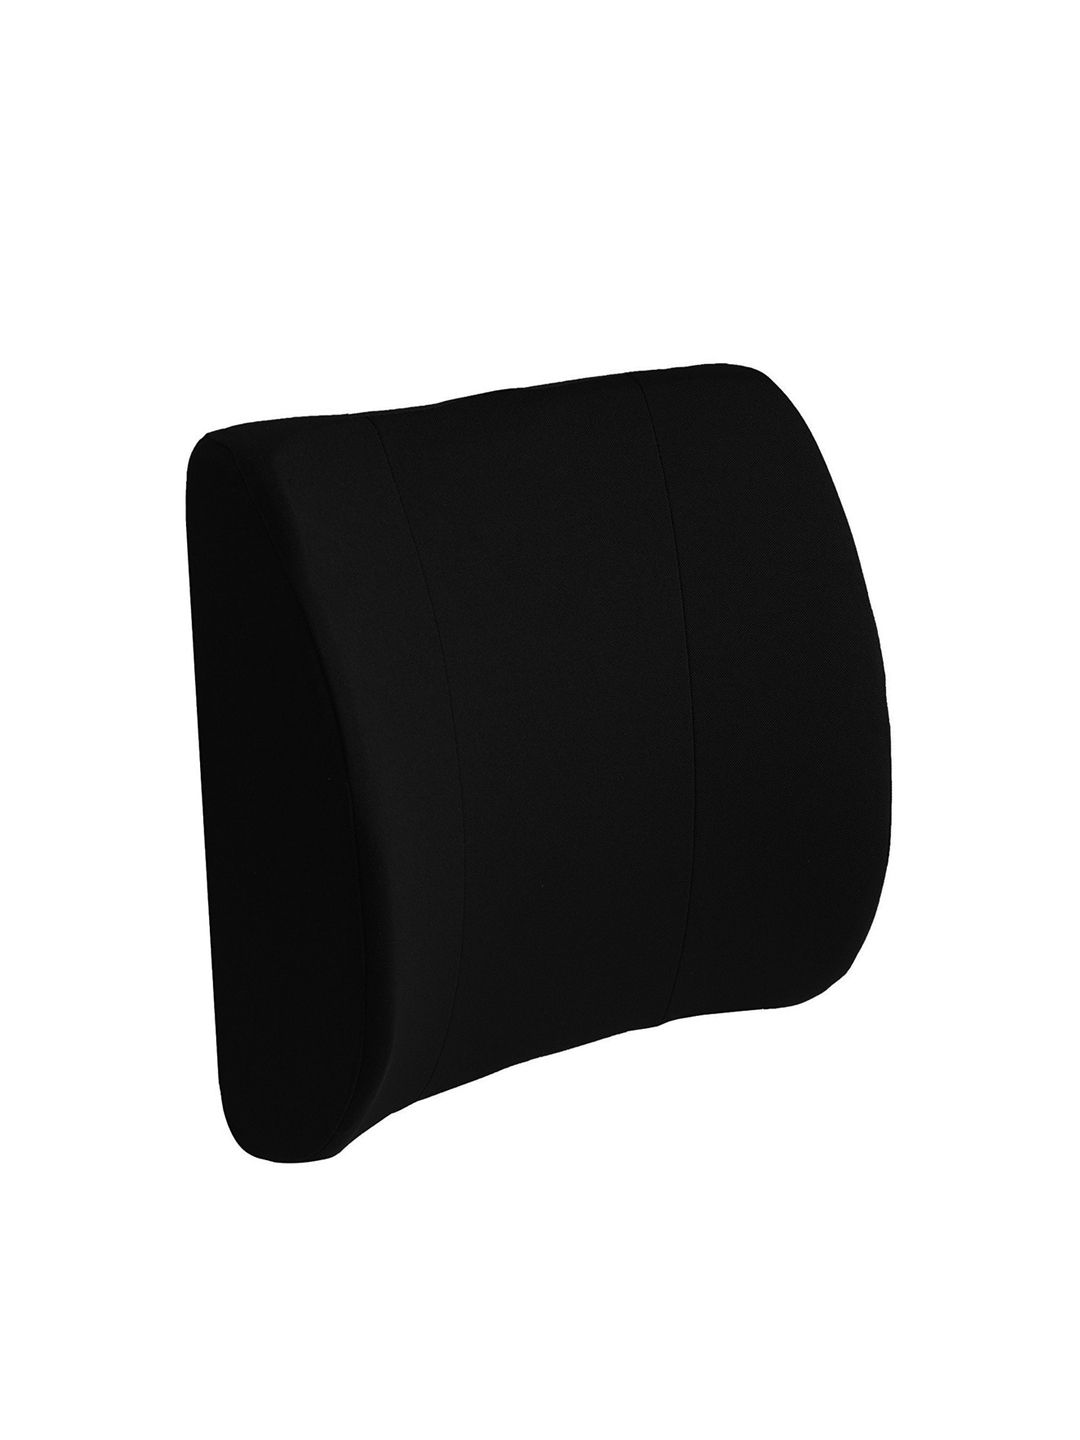 Pum Pum Black Solid Memory Foam Therapedic Lumbar Backrest Price in India